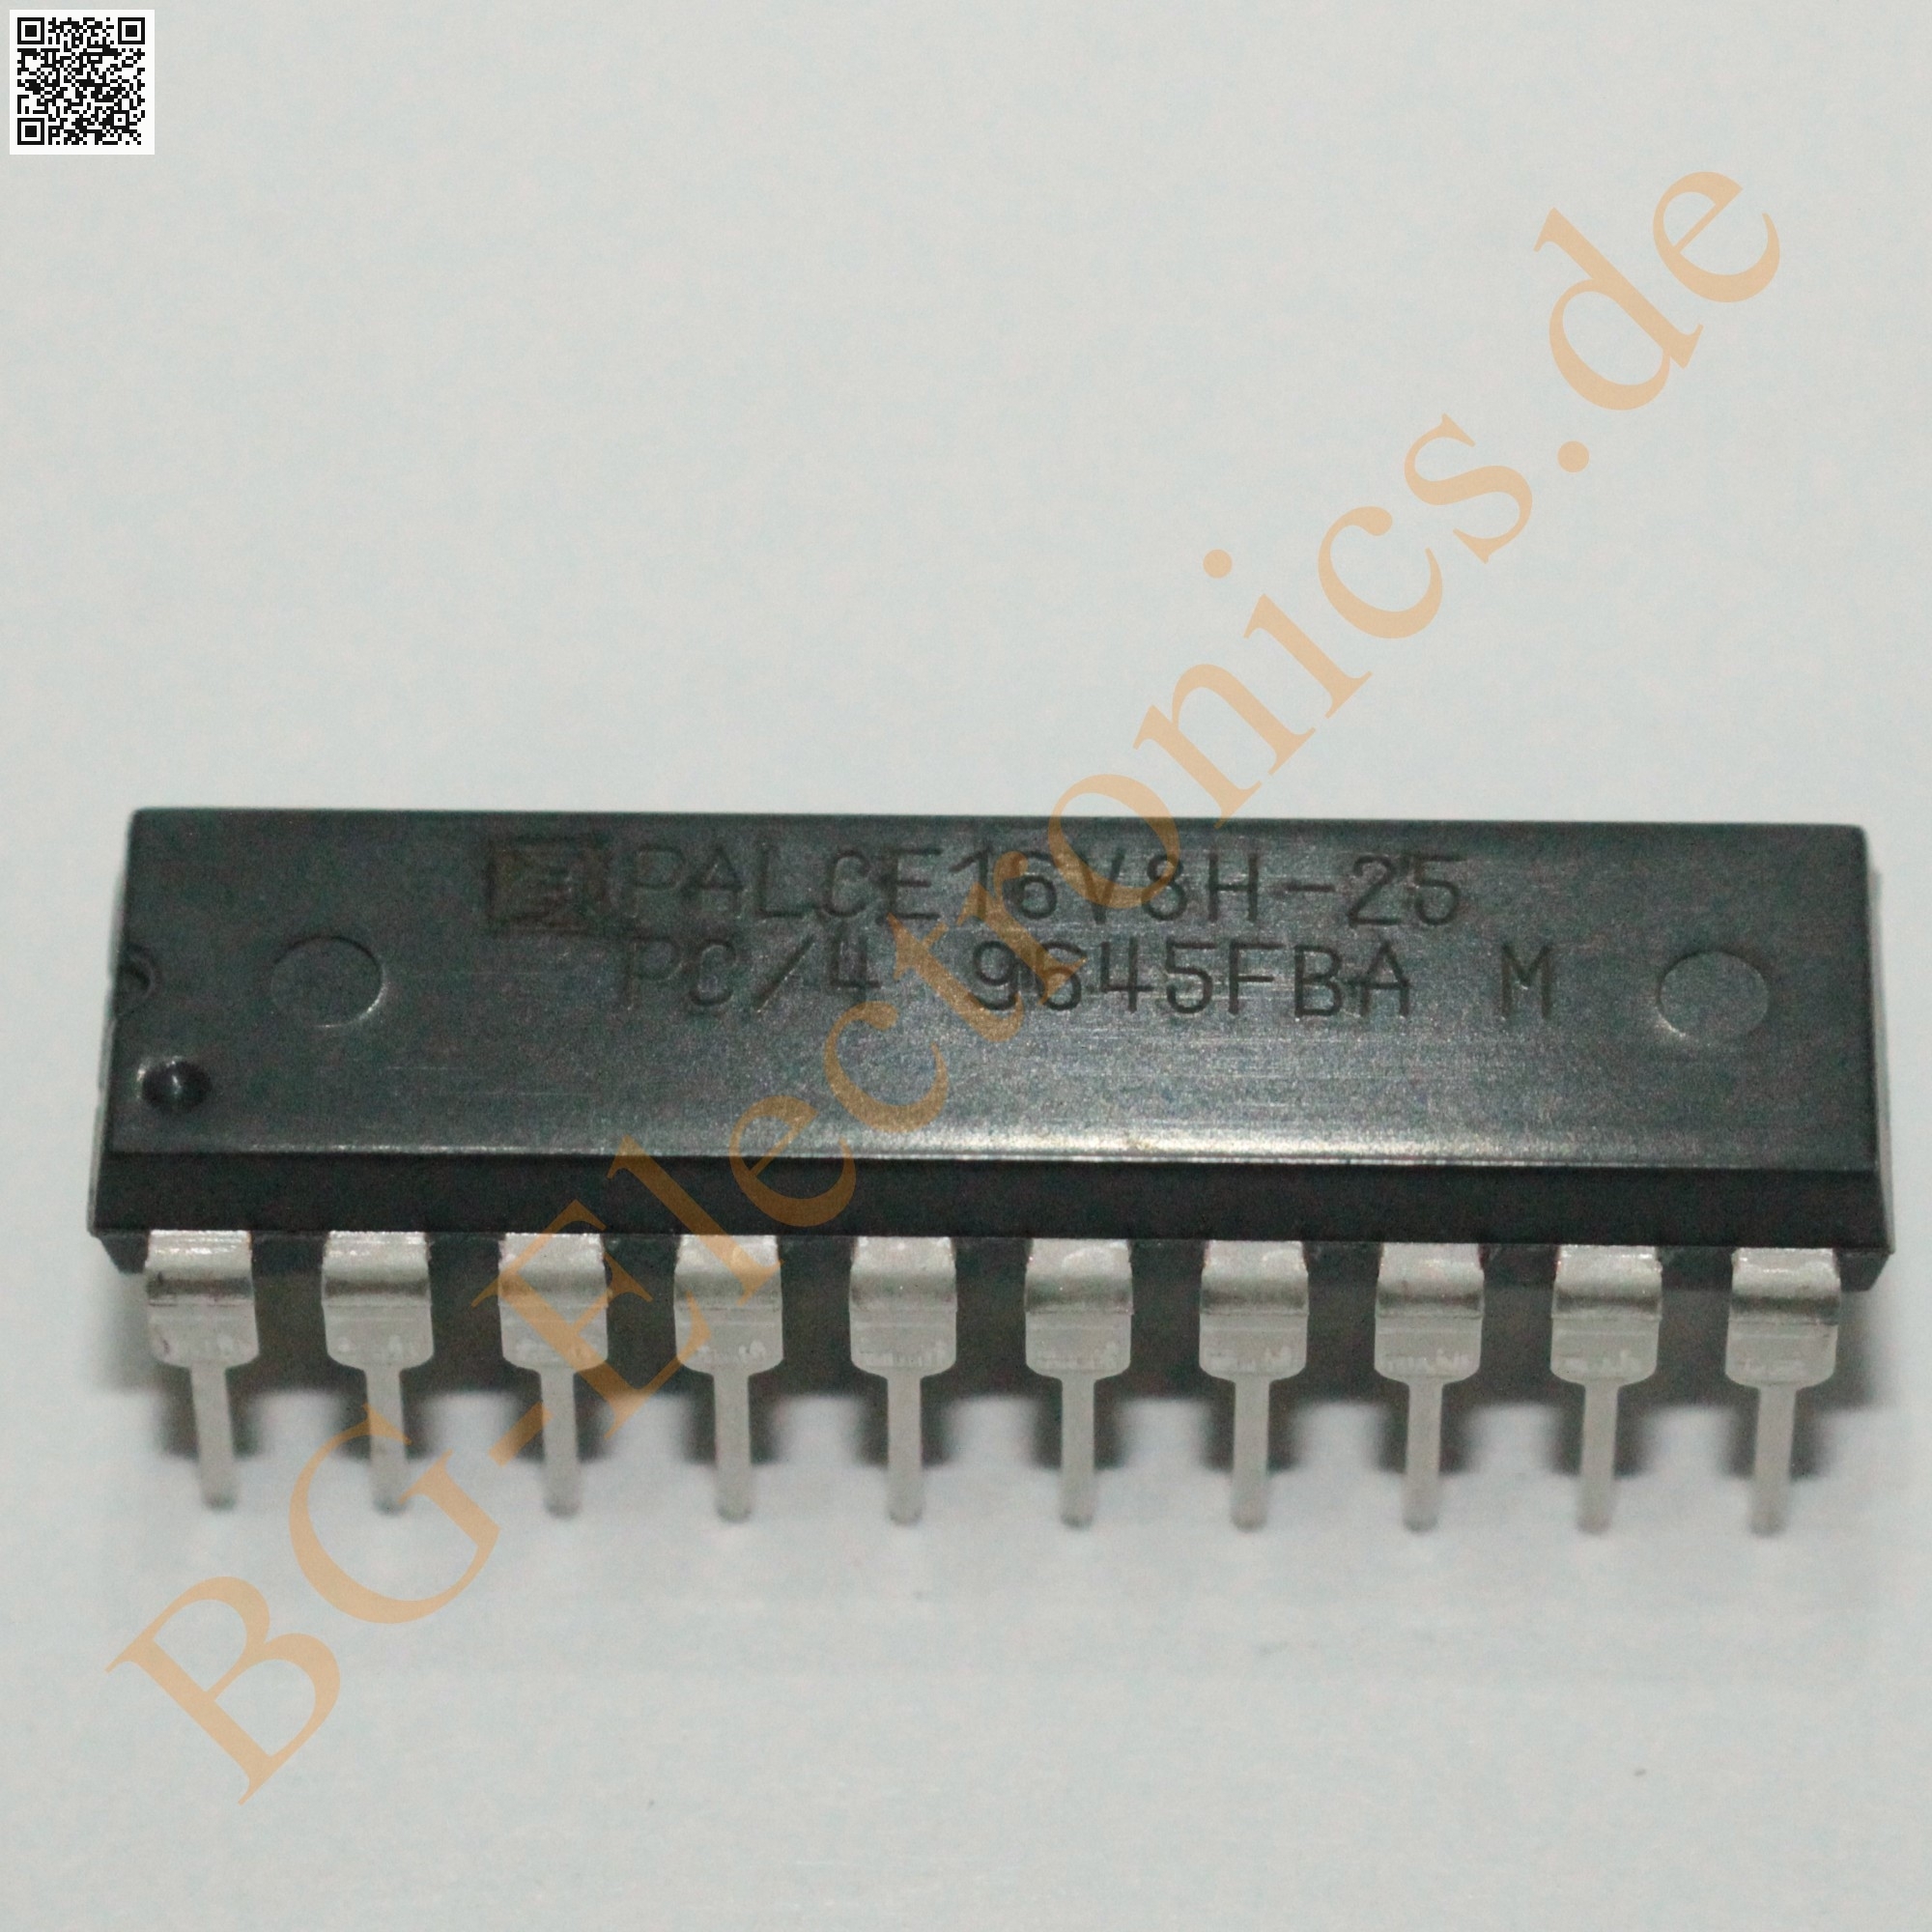 AMD PALCE 16v8h-25pc 20 Pins CMOS Universal Programmable Array Logic 10-teilig